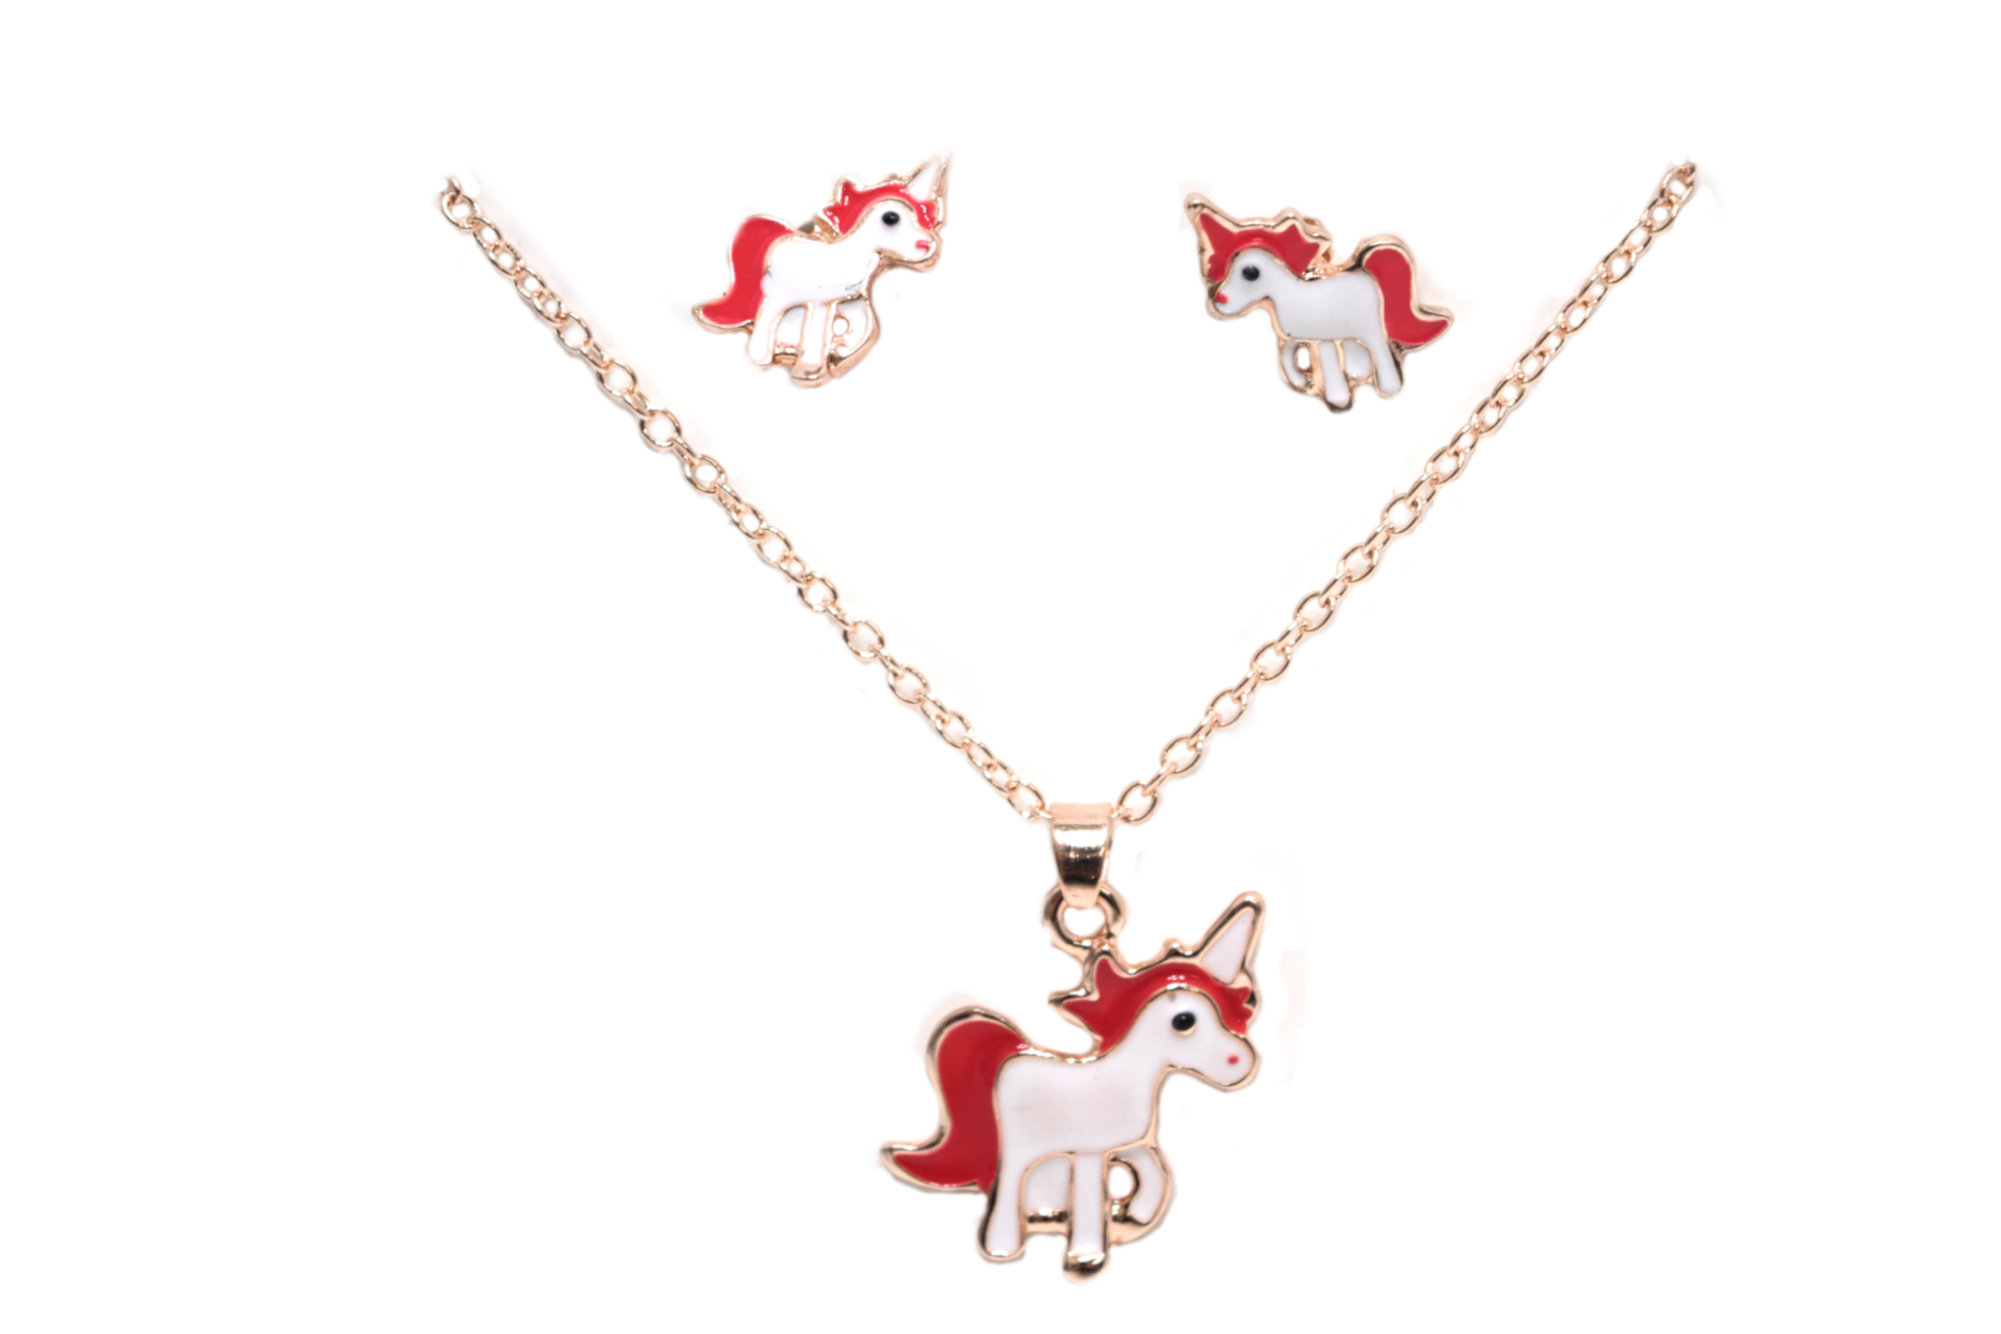 Unicorn Necklace Set White Pink/Red Earring Necklace Unicorn Girls Jewelry, J-154-US - image 2 of 10